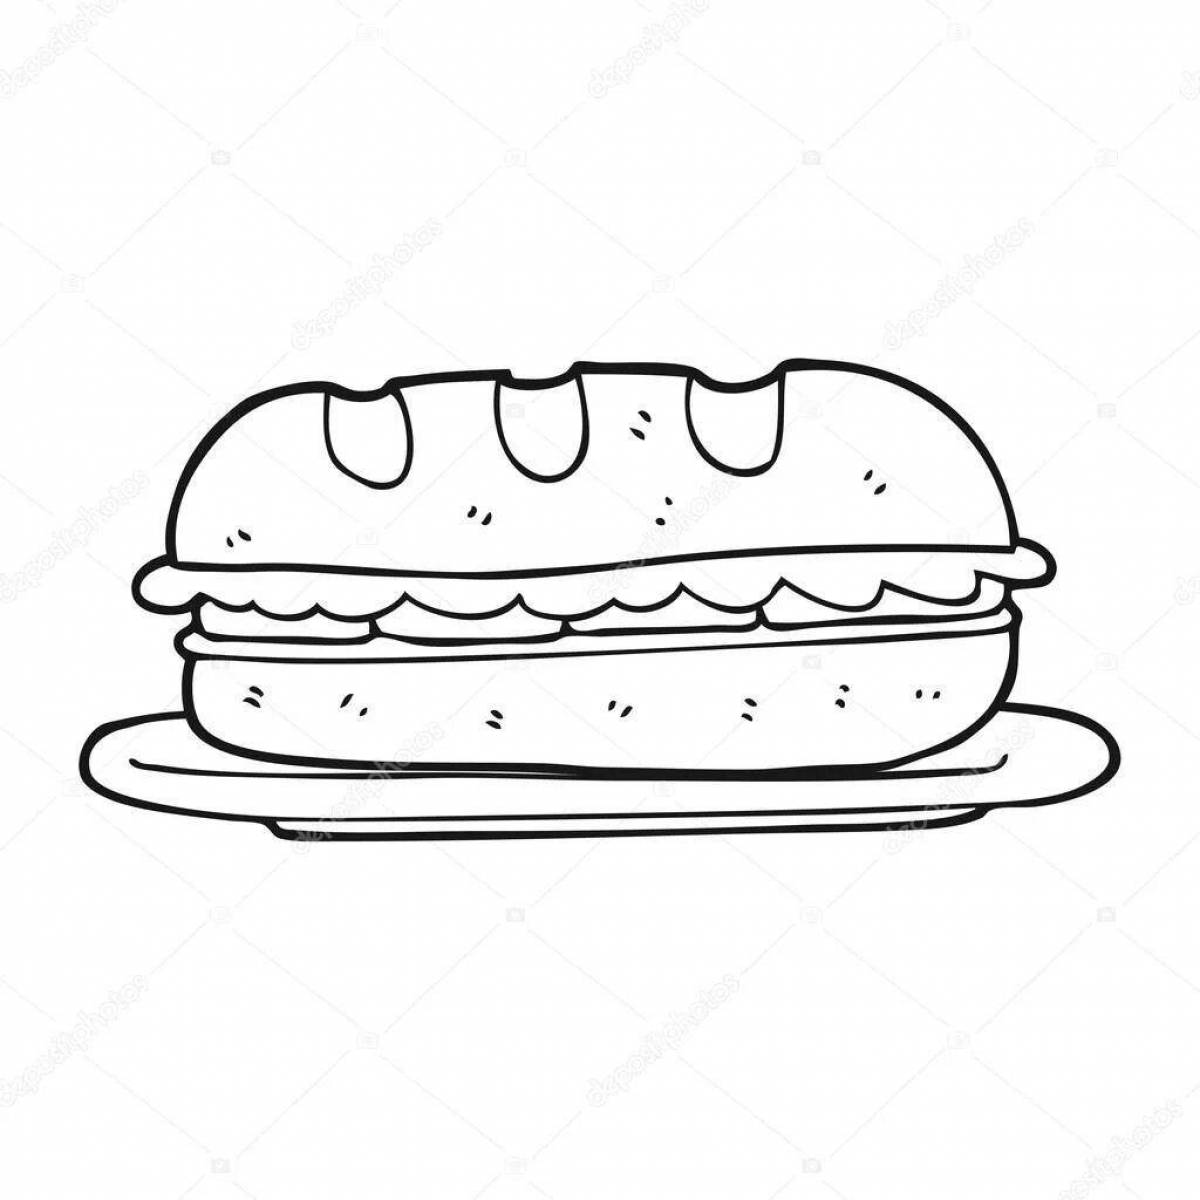 Delicious sausage sandwich coloring page